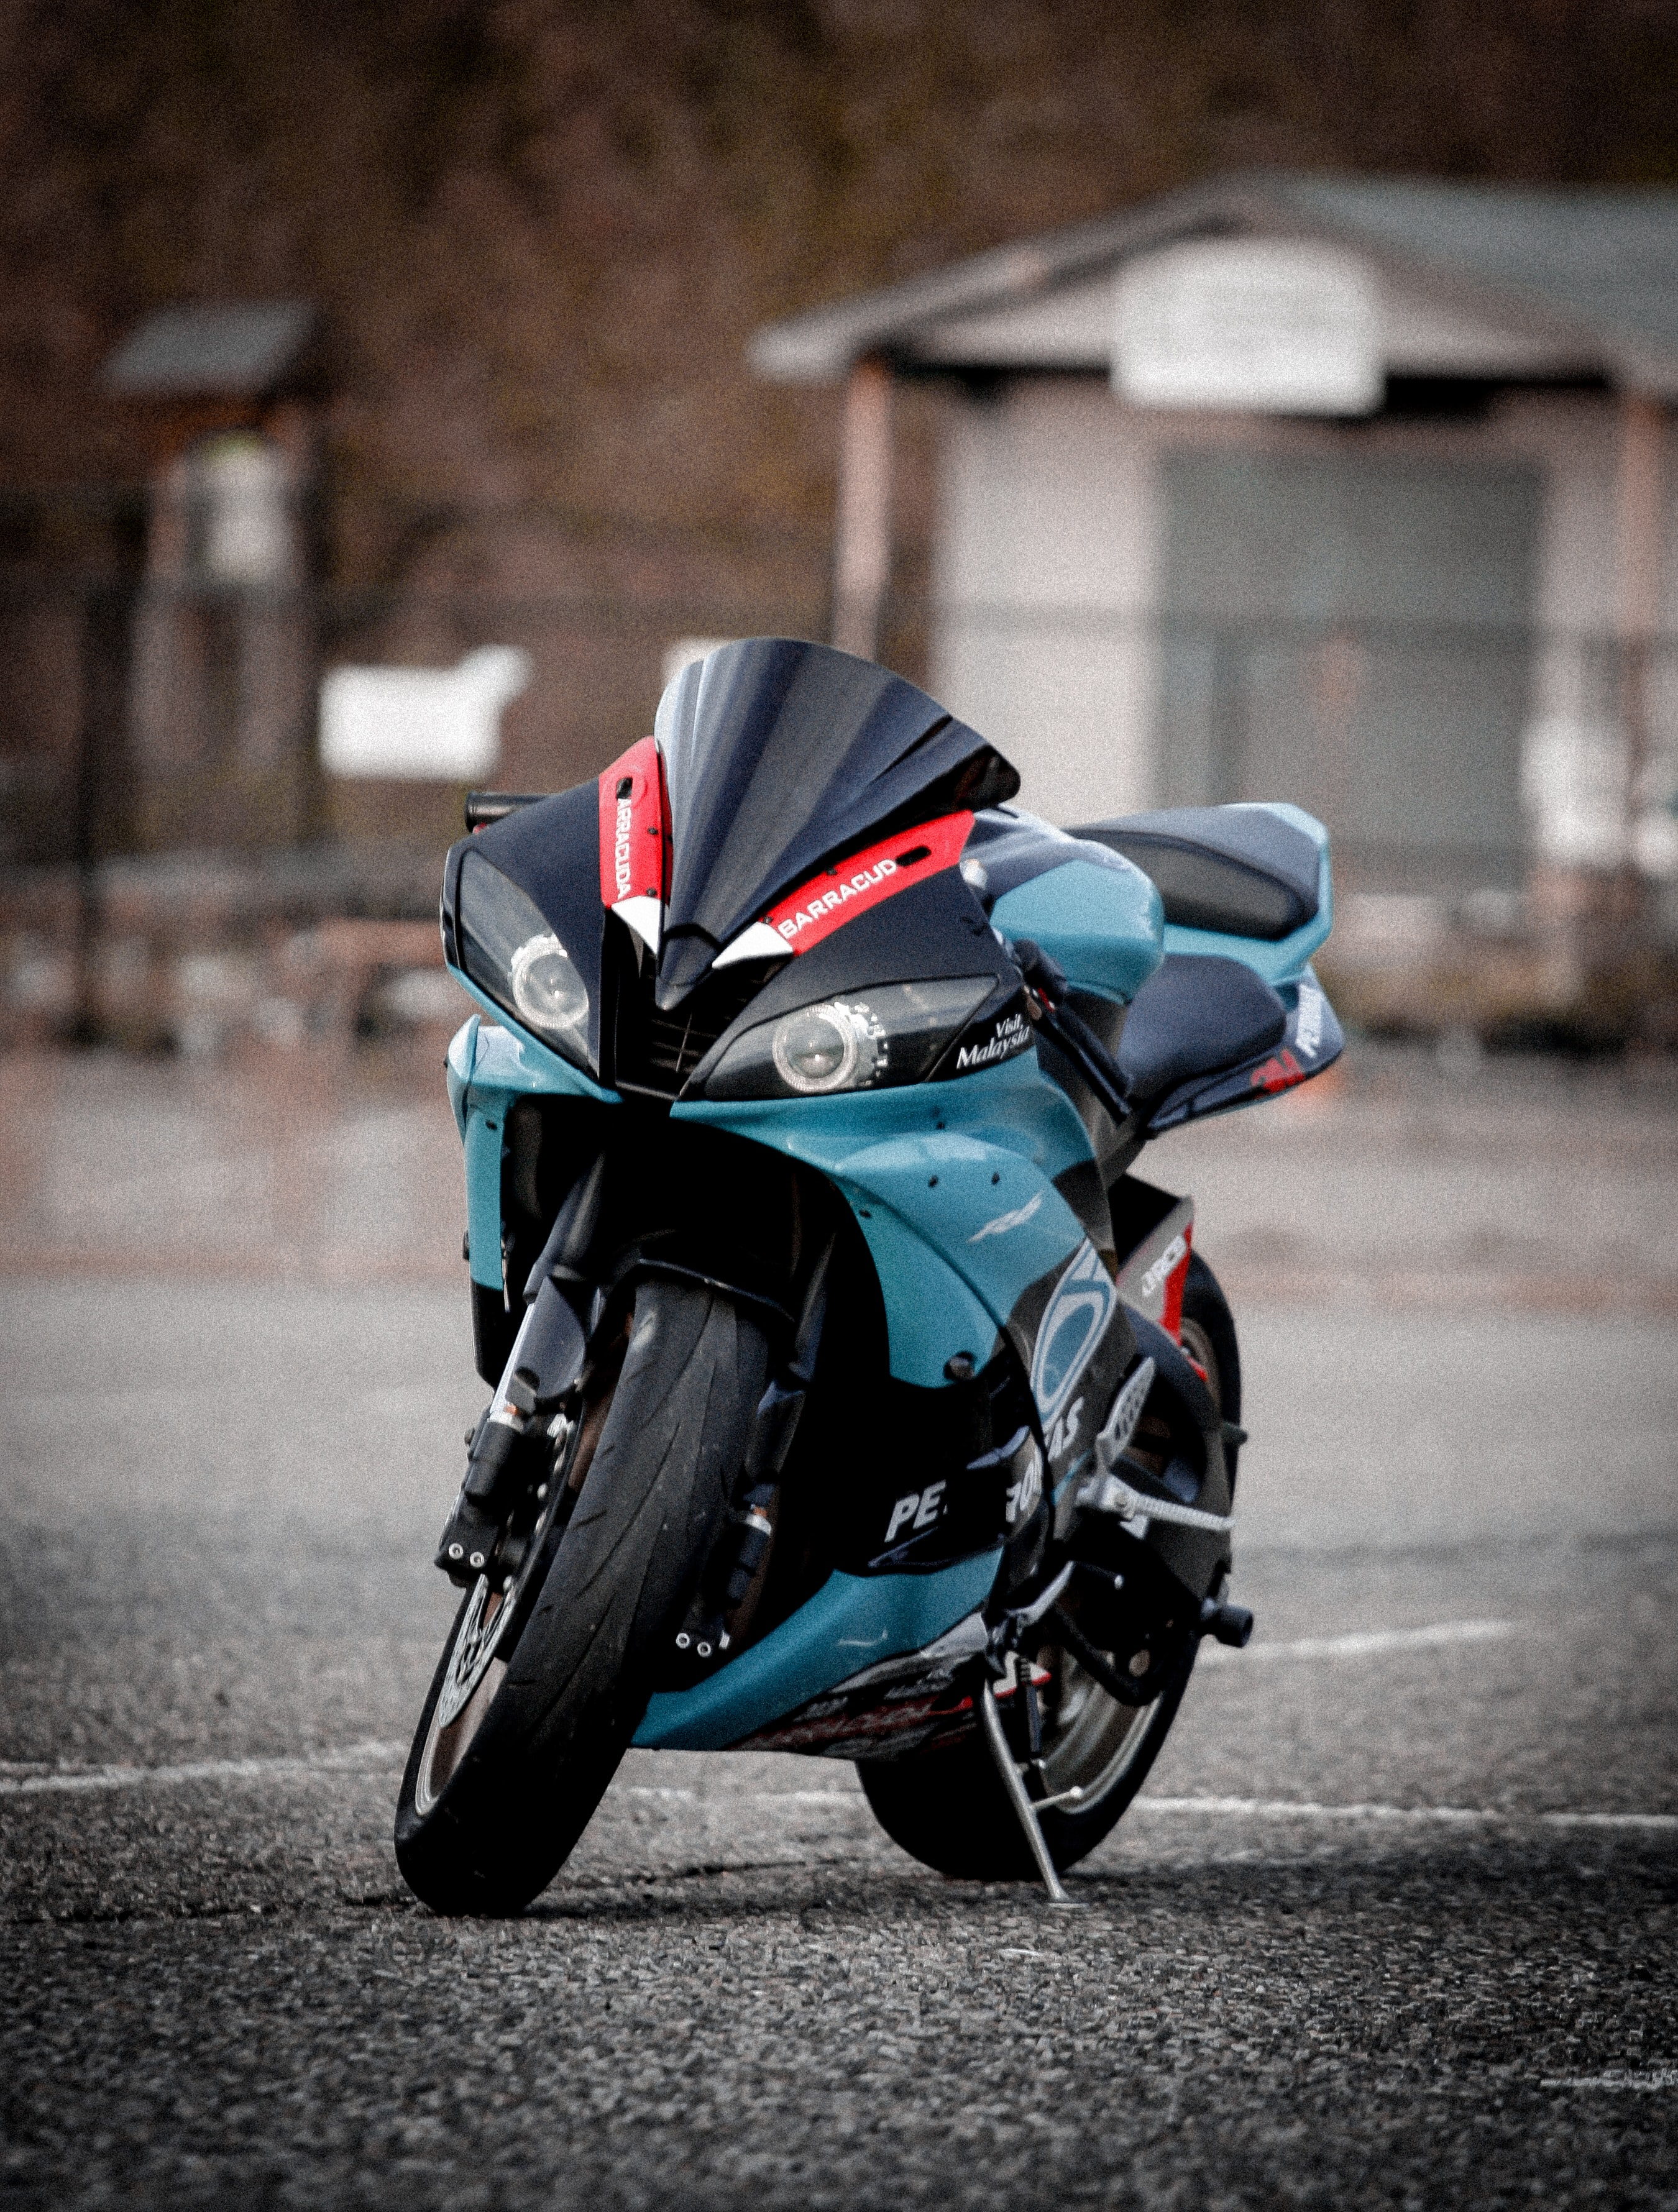 bike, motorcycles, sport bike, motorcycle, blue, front view, sportbike